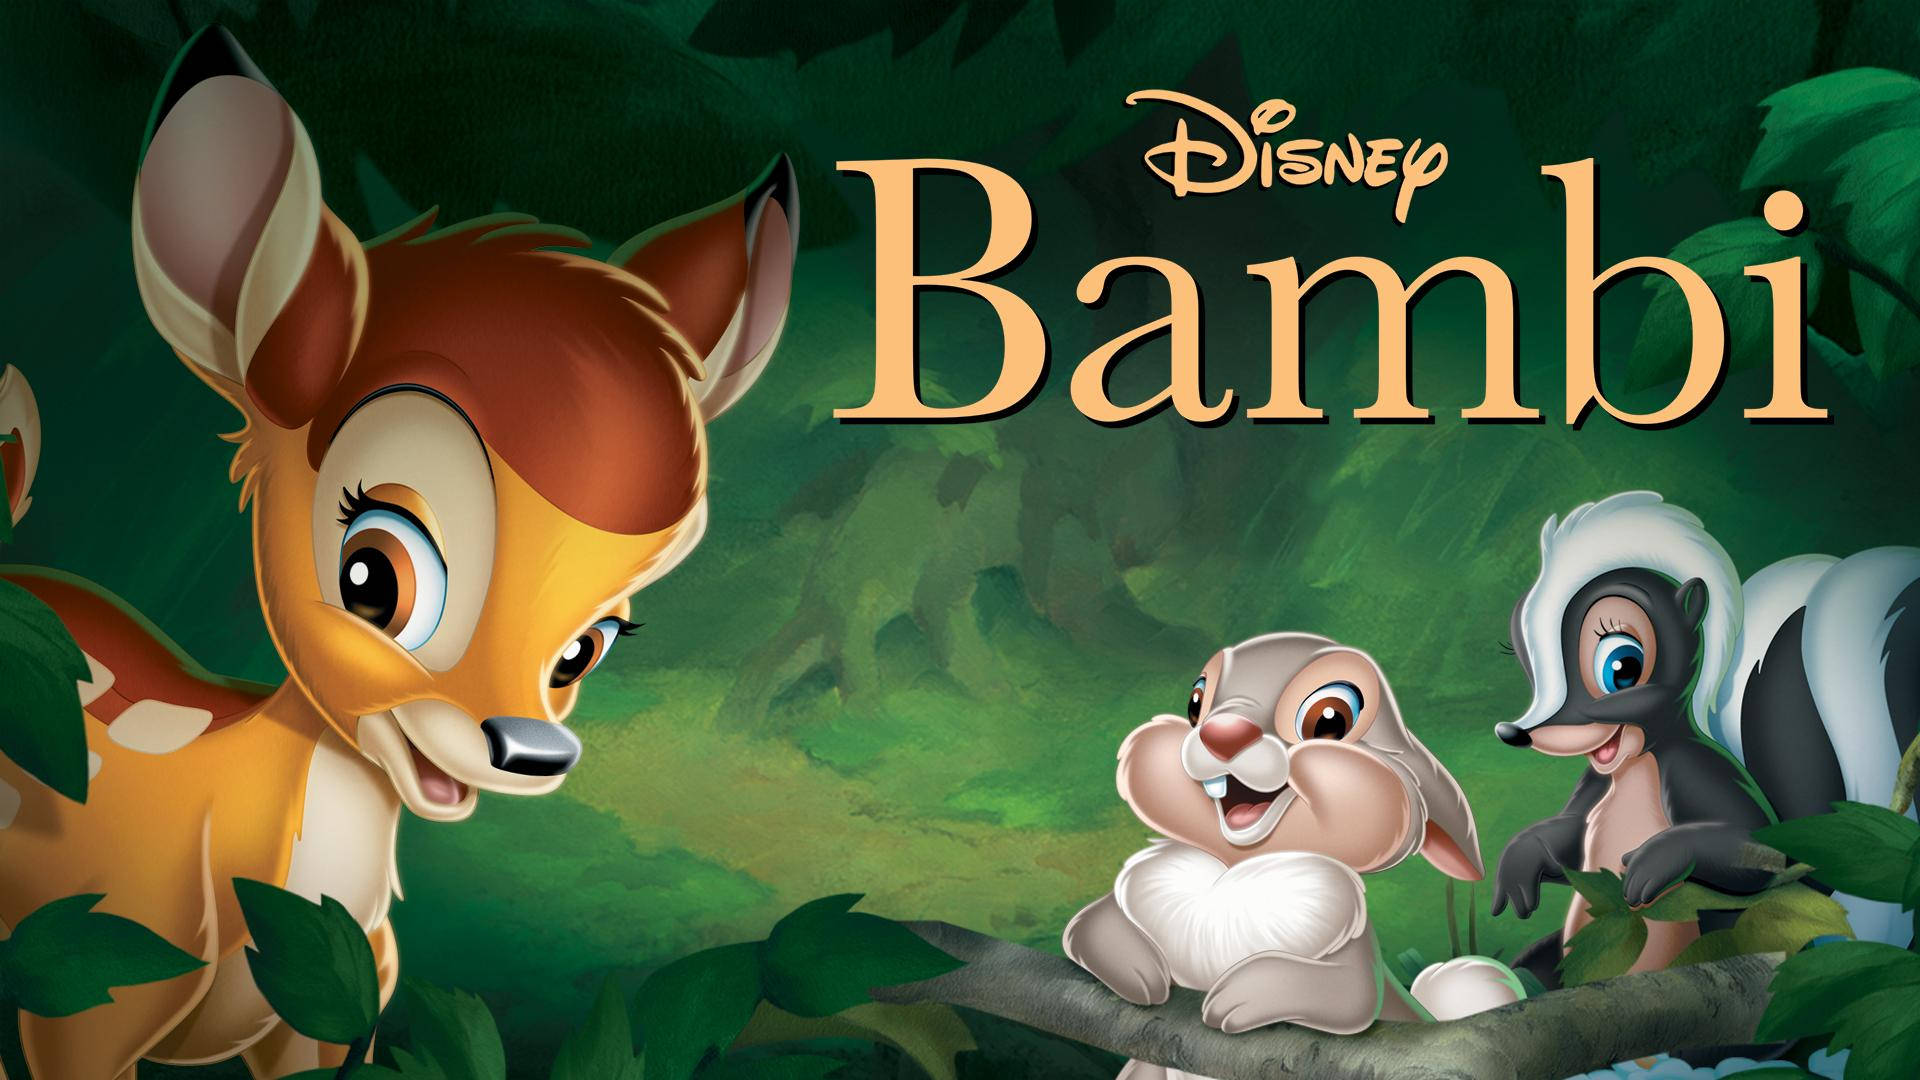 Disney Bambi Cover Background